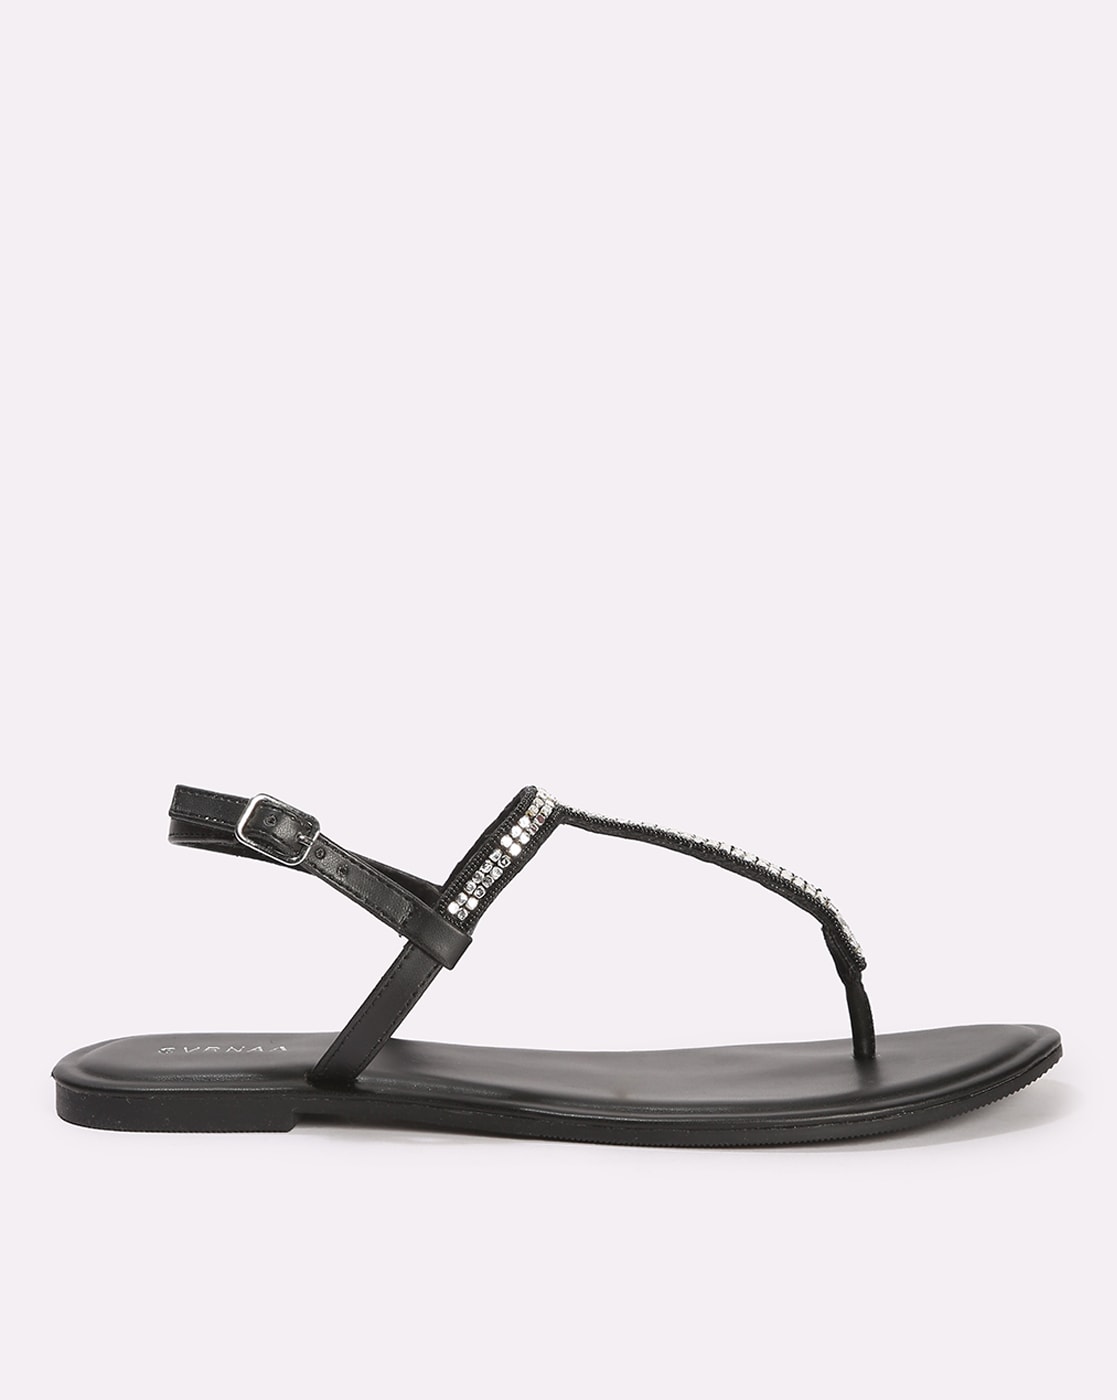 Shoe Land Monday-Women's Open Toe One Band Ankle Strap Flat Sandals (Black)